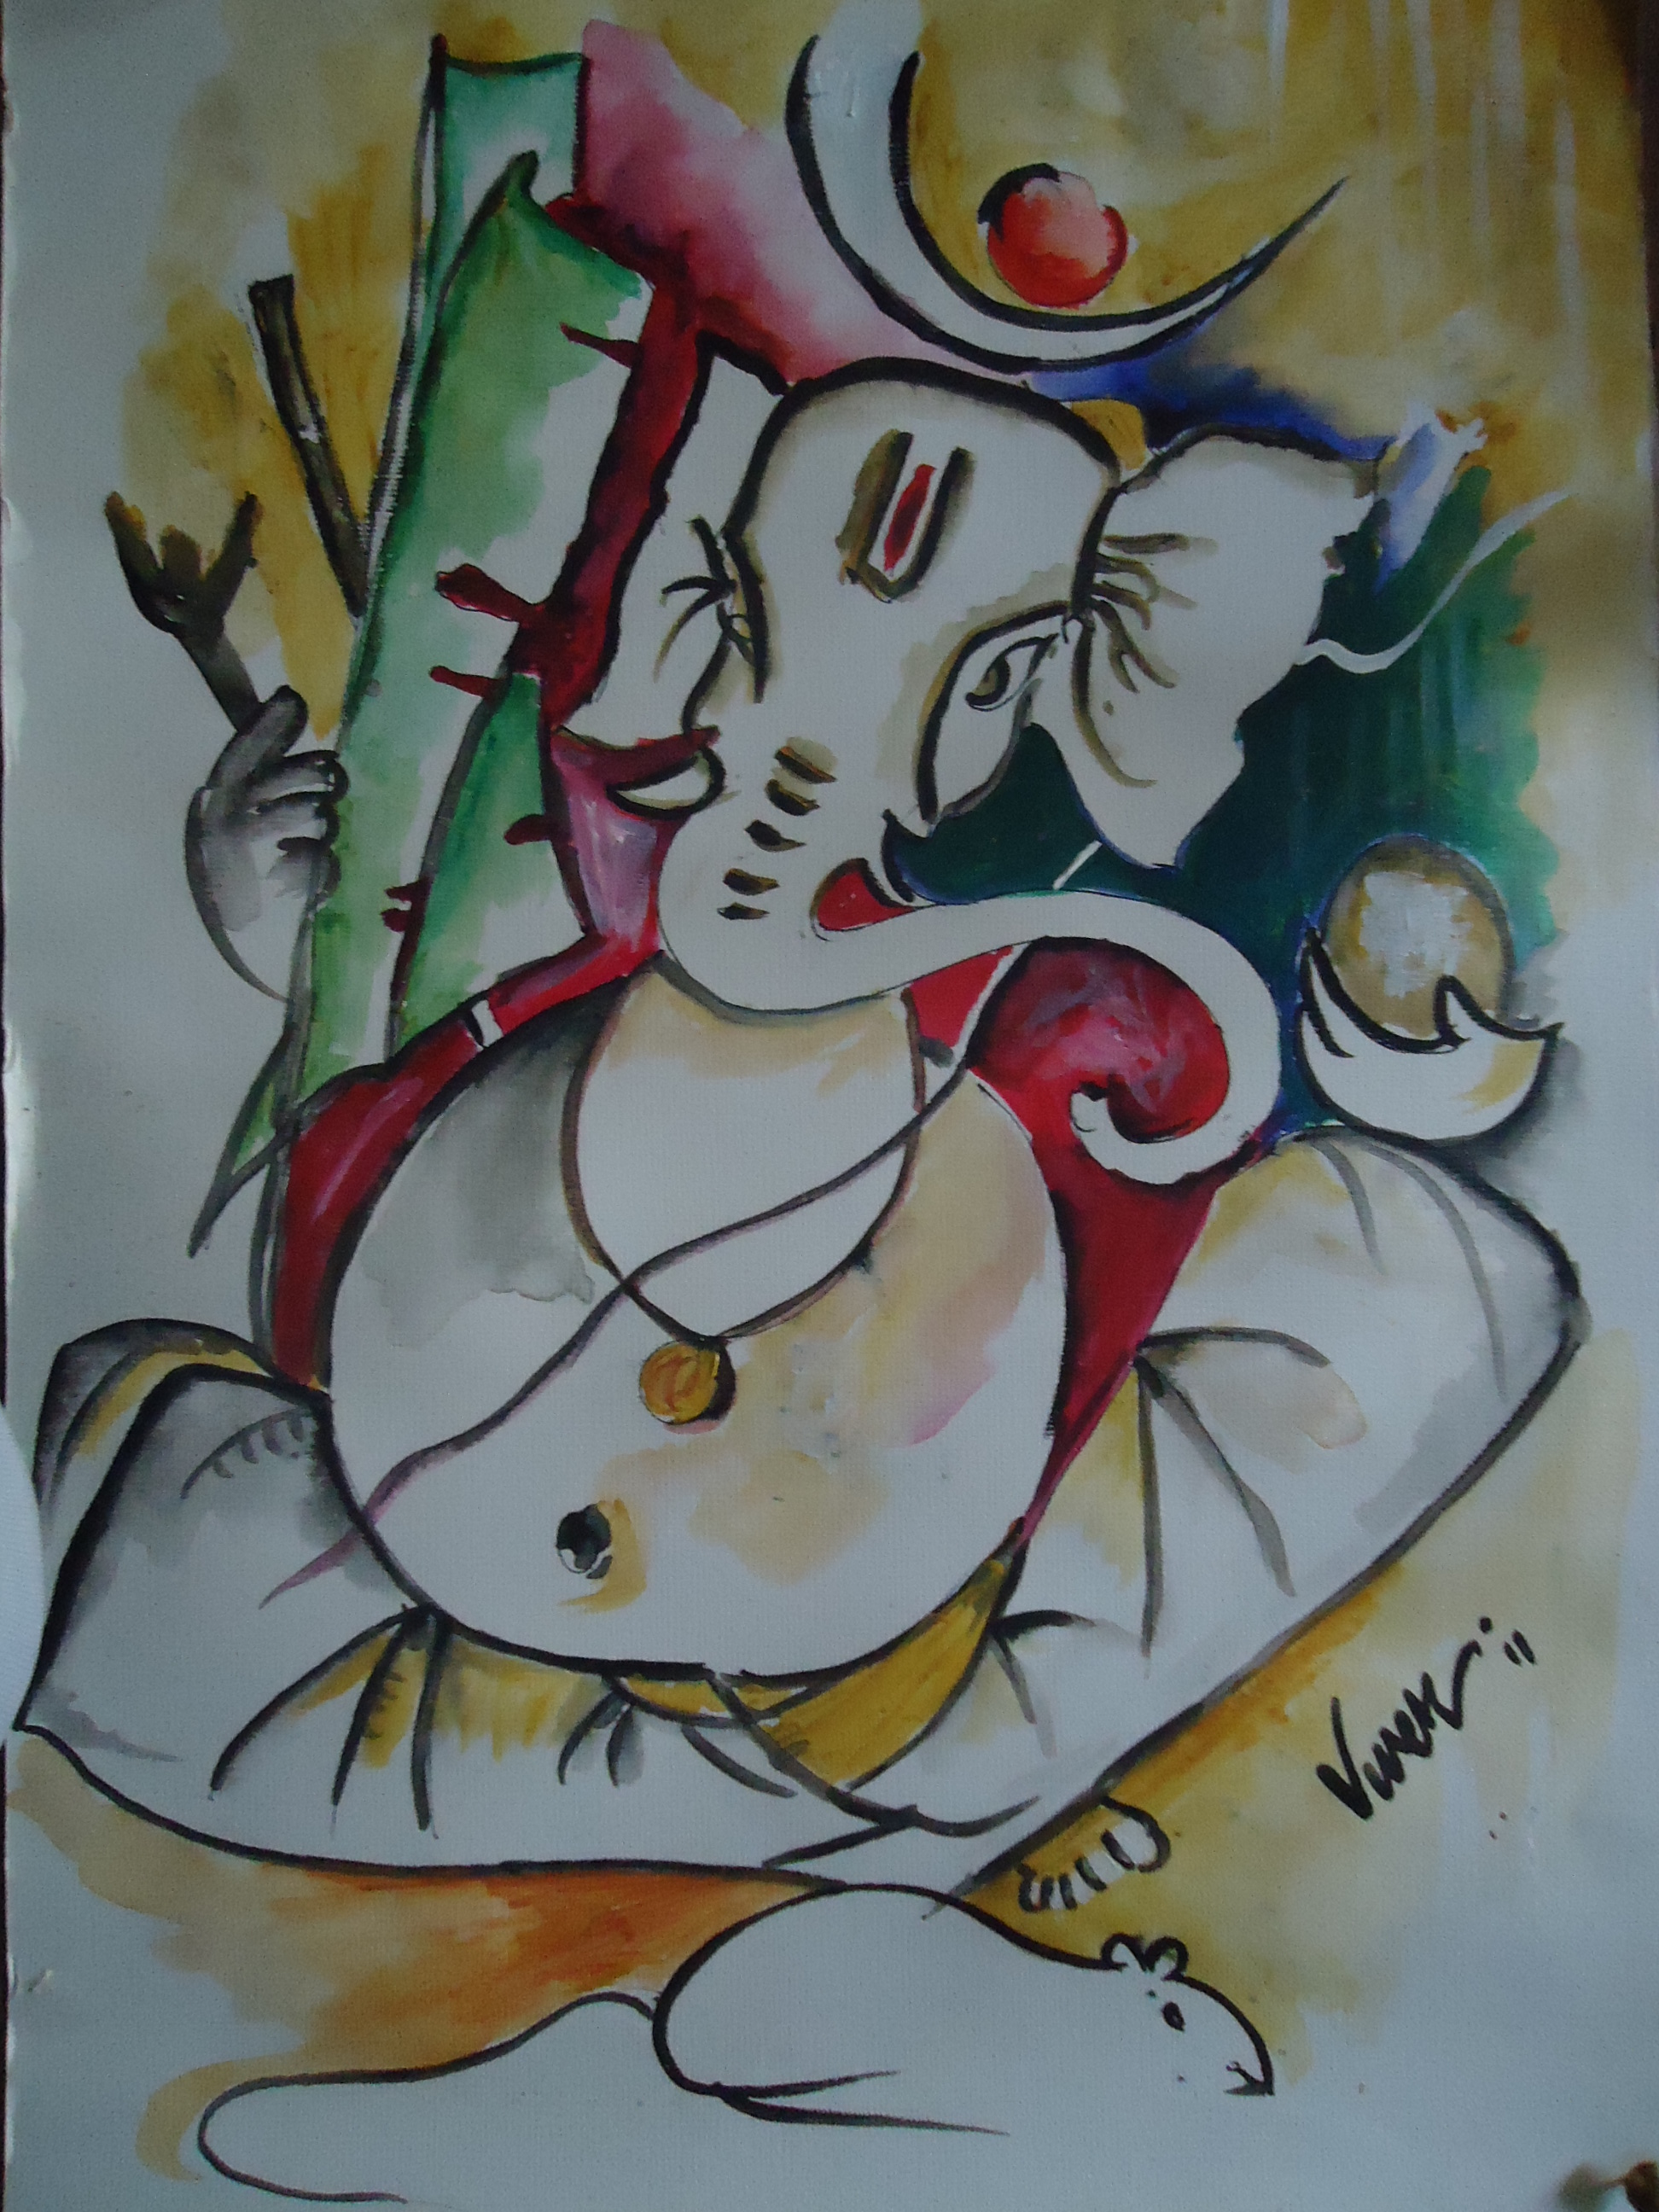 itsrinki on X Beautiful sketch on the wall  sketch by me  Ganesha Ji   httpstcoLPqG6G28Qr  X